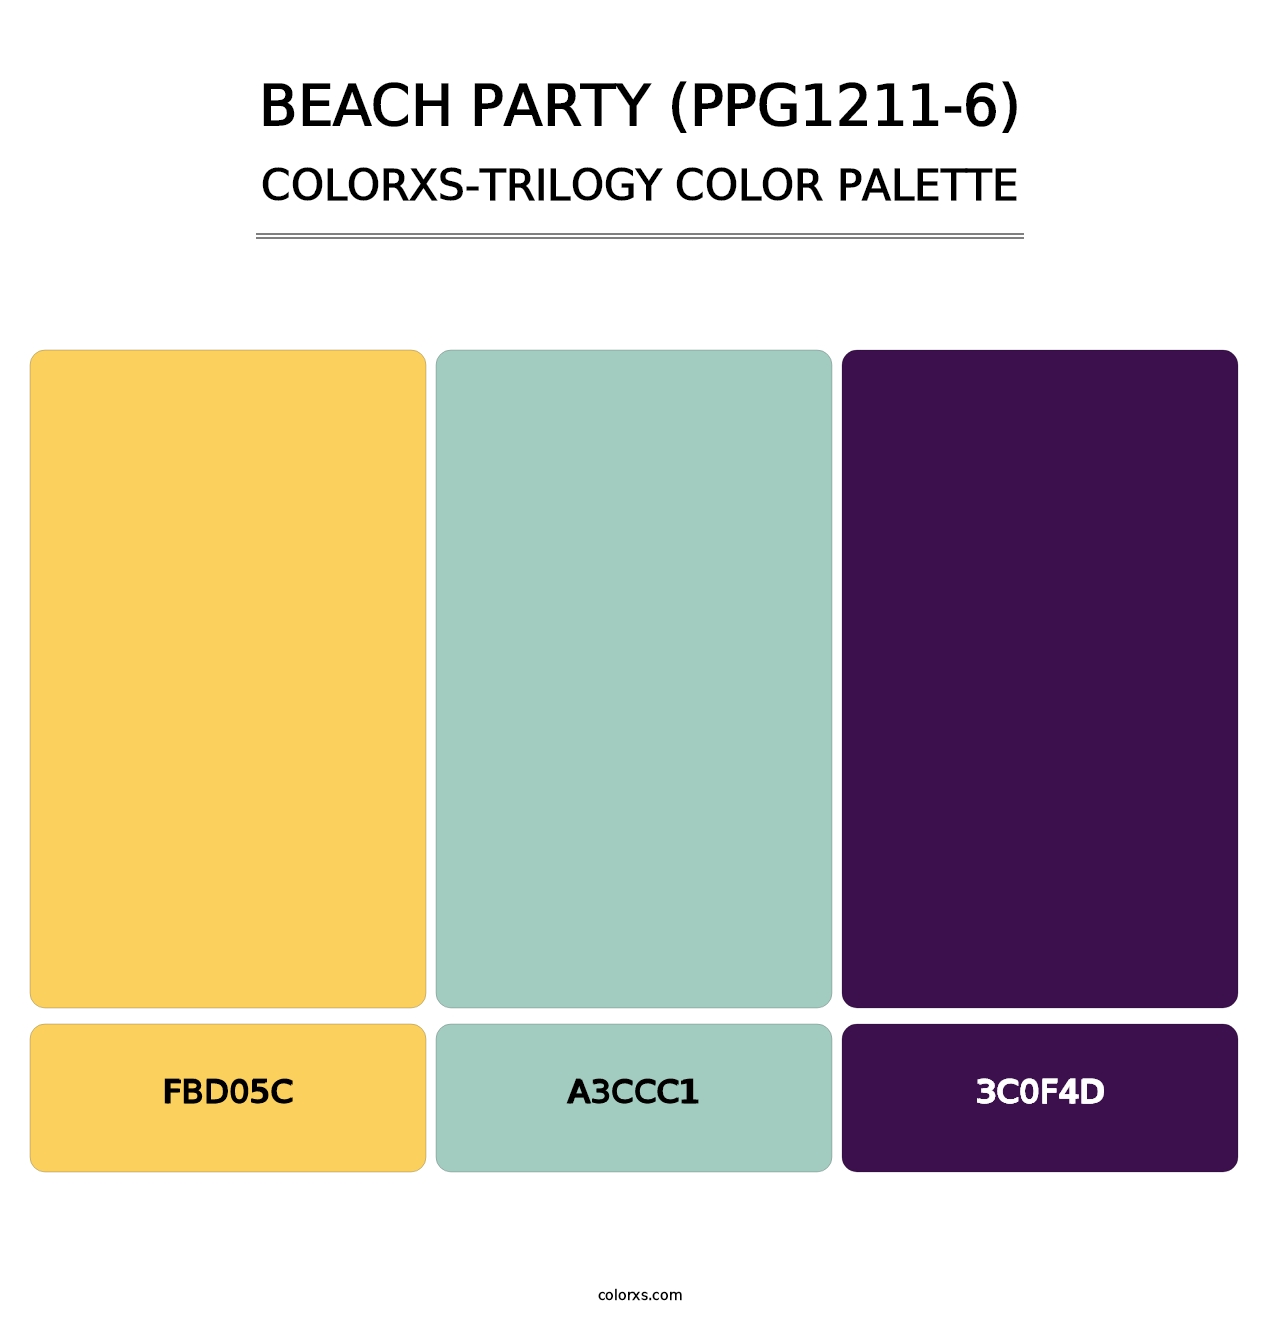 Beach Party (PPG1211-6) - Colorxs Trilogy Palette